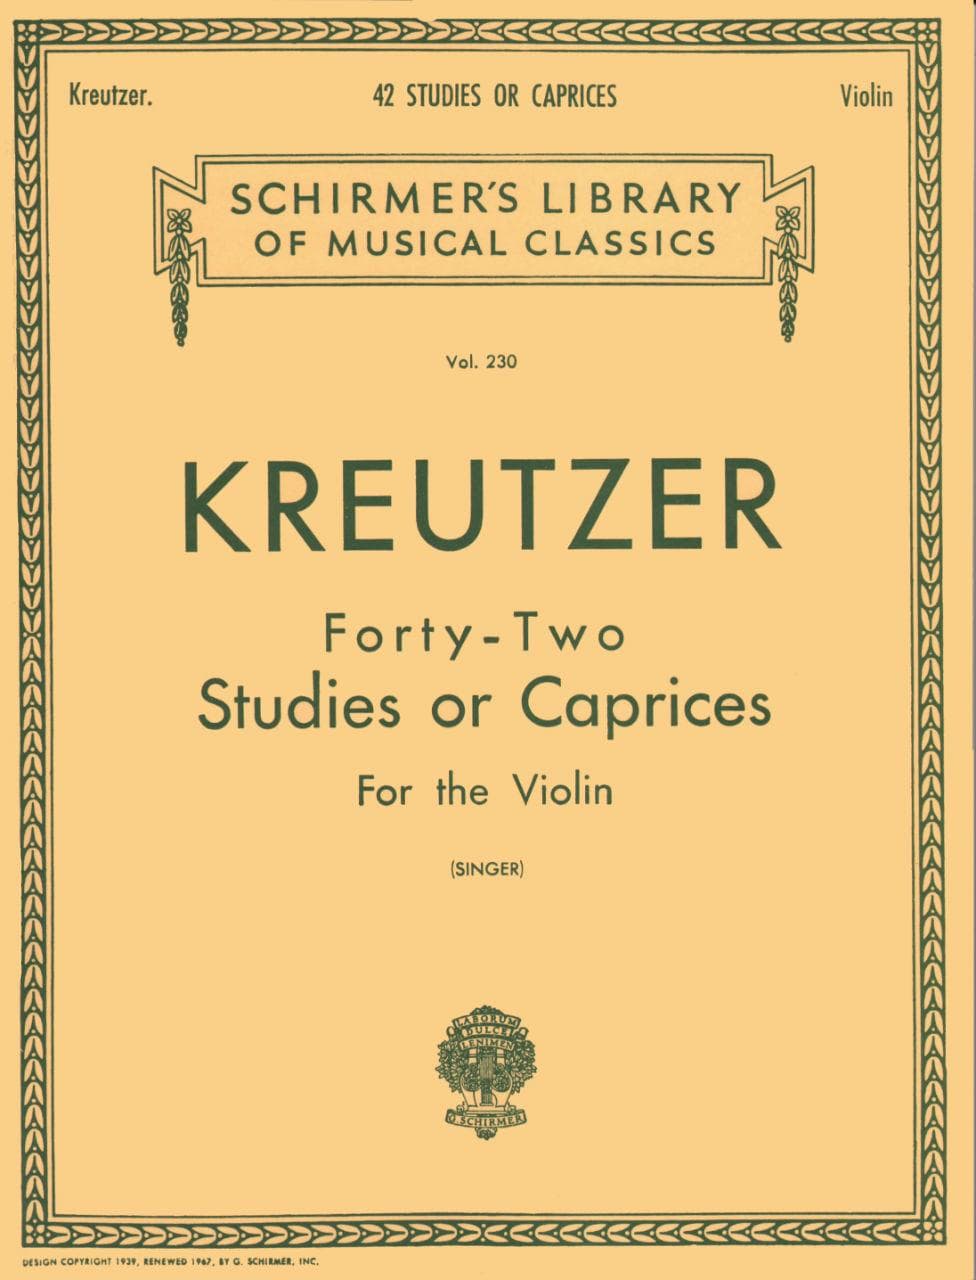 Kreutzer, Rodolphe - 42 Studies or Caprices - Violin solo - edited by Edmund Singer - G Schirmer Edition